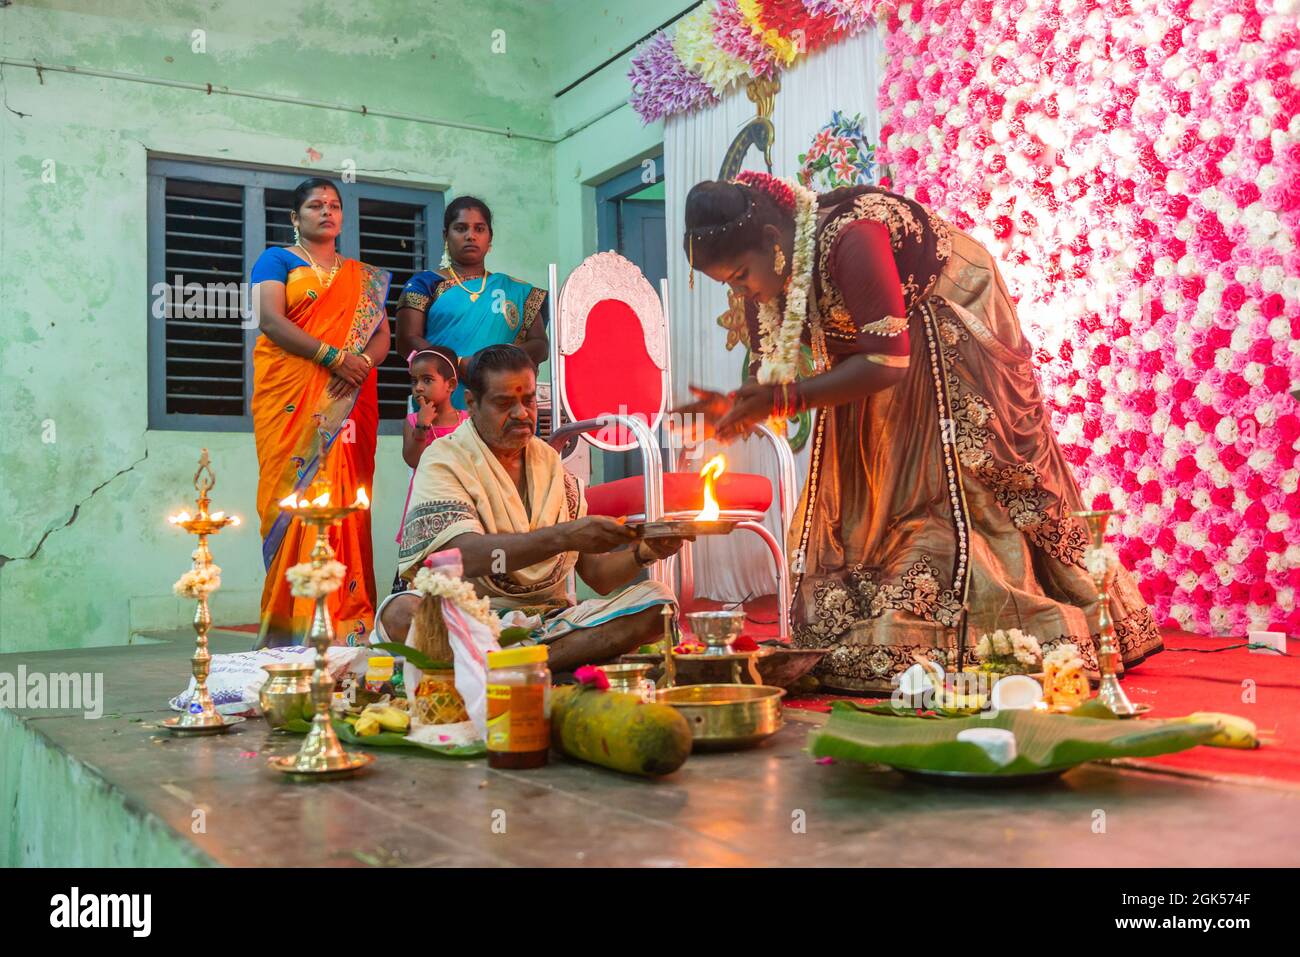 Tamil Nadu, India - 12th September 2021: The Ritushuddhi or Ritu Kala Samskara is the ceremony that celebrates a girl’s transition to womanhood. This Stock Photo